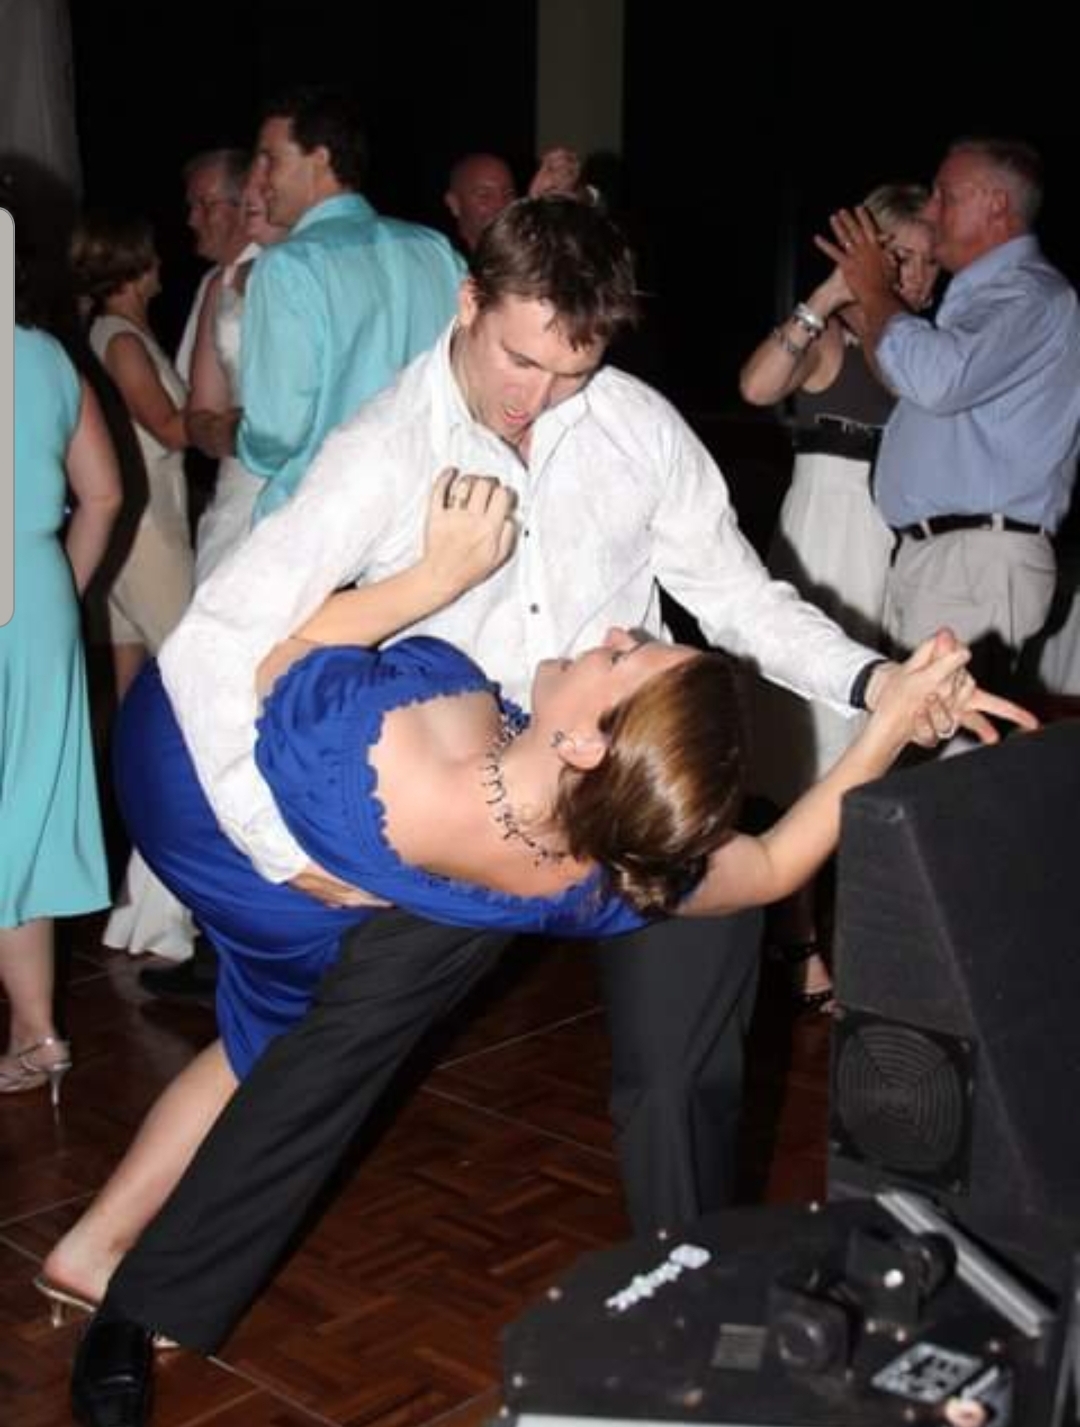 (I2012, Celebrating a friend’s wedding with my husband, Cairns, QLD, Australia)